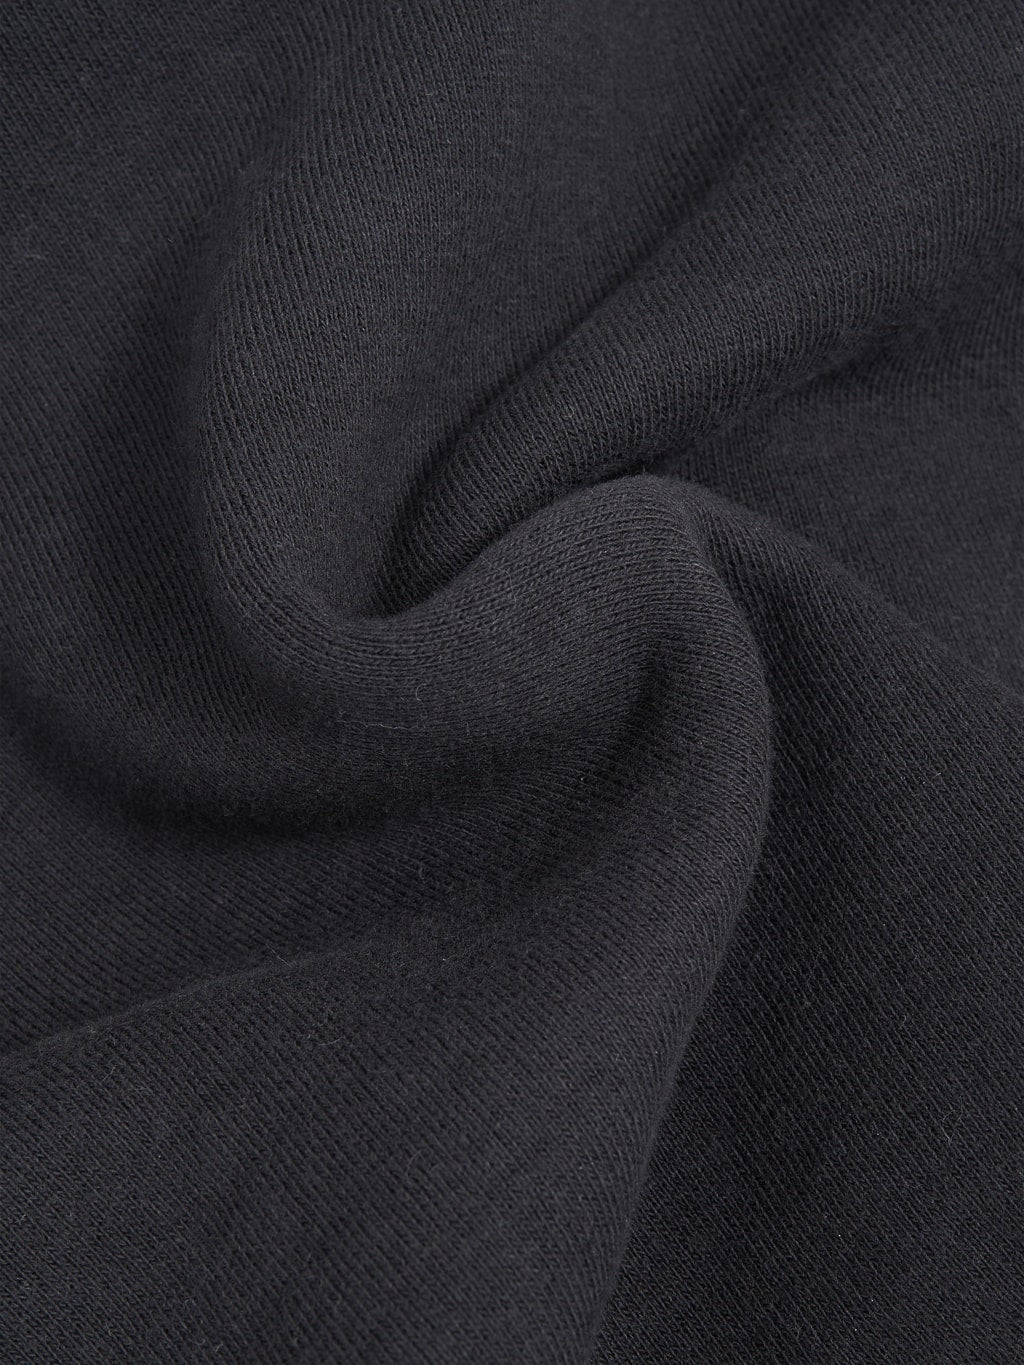 the strike gold zip hoodie black fabric texture